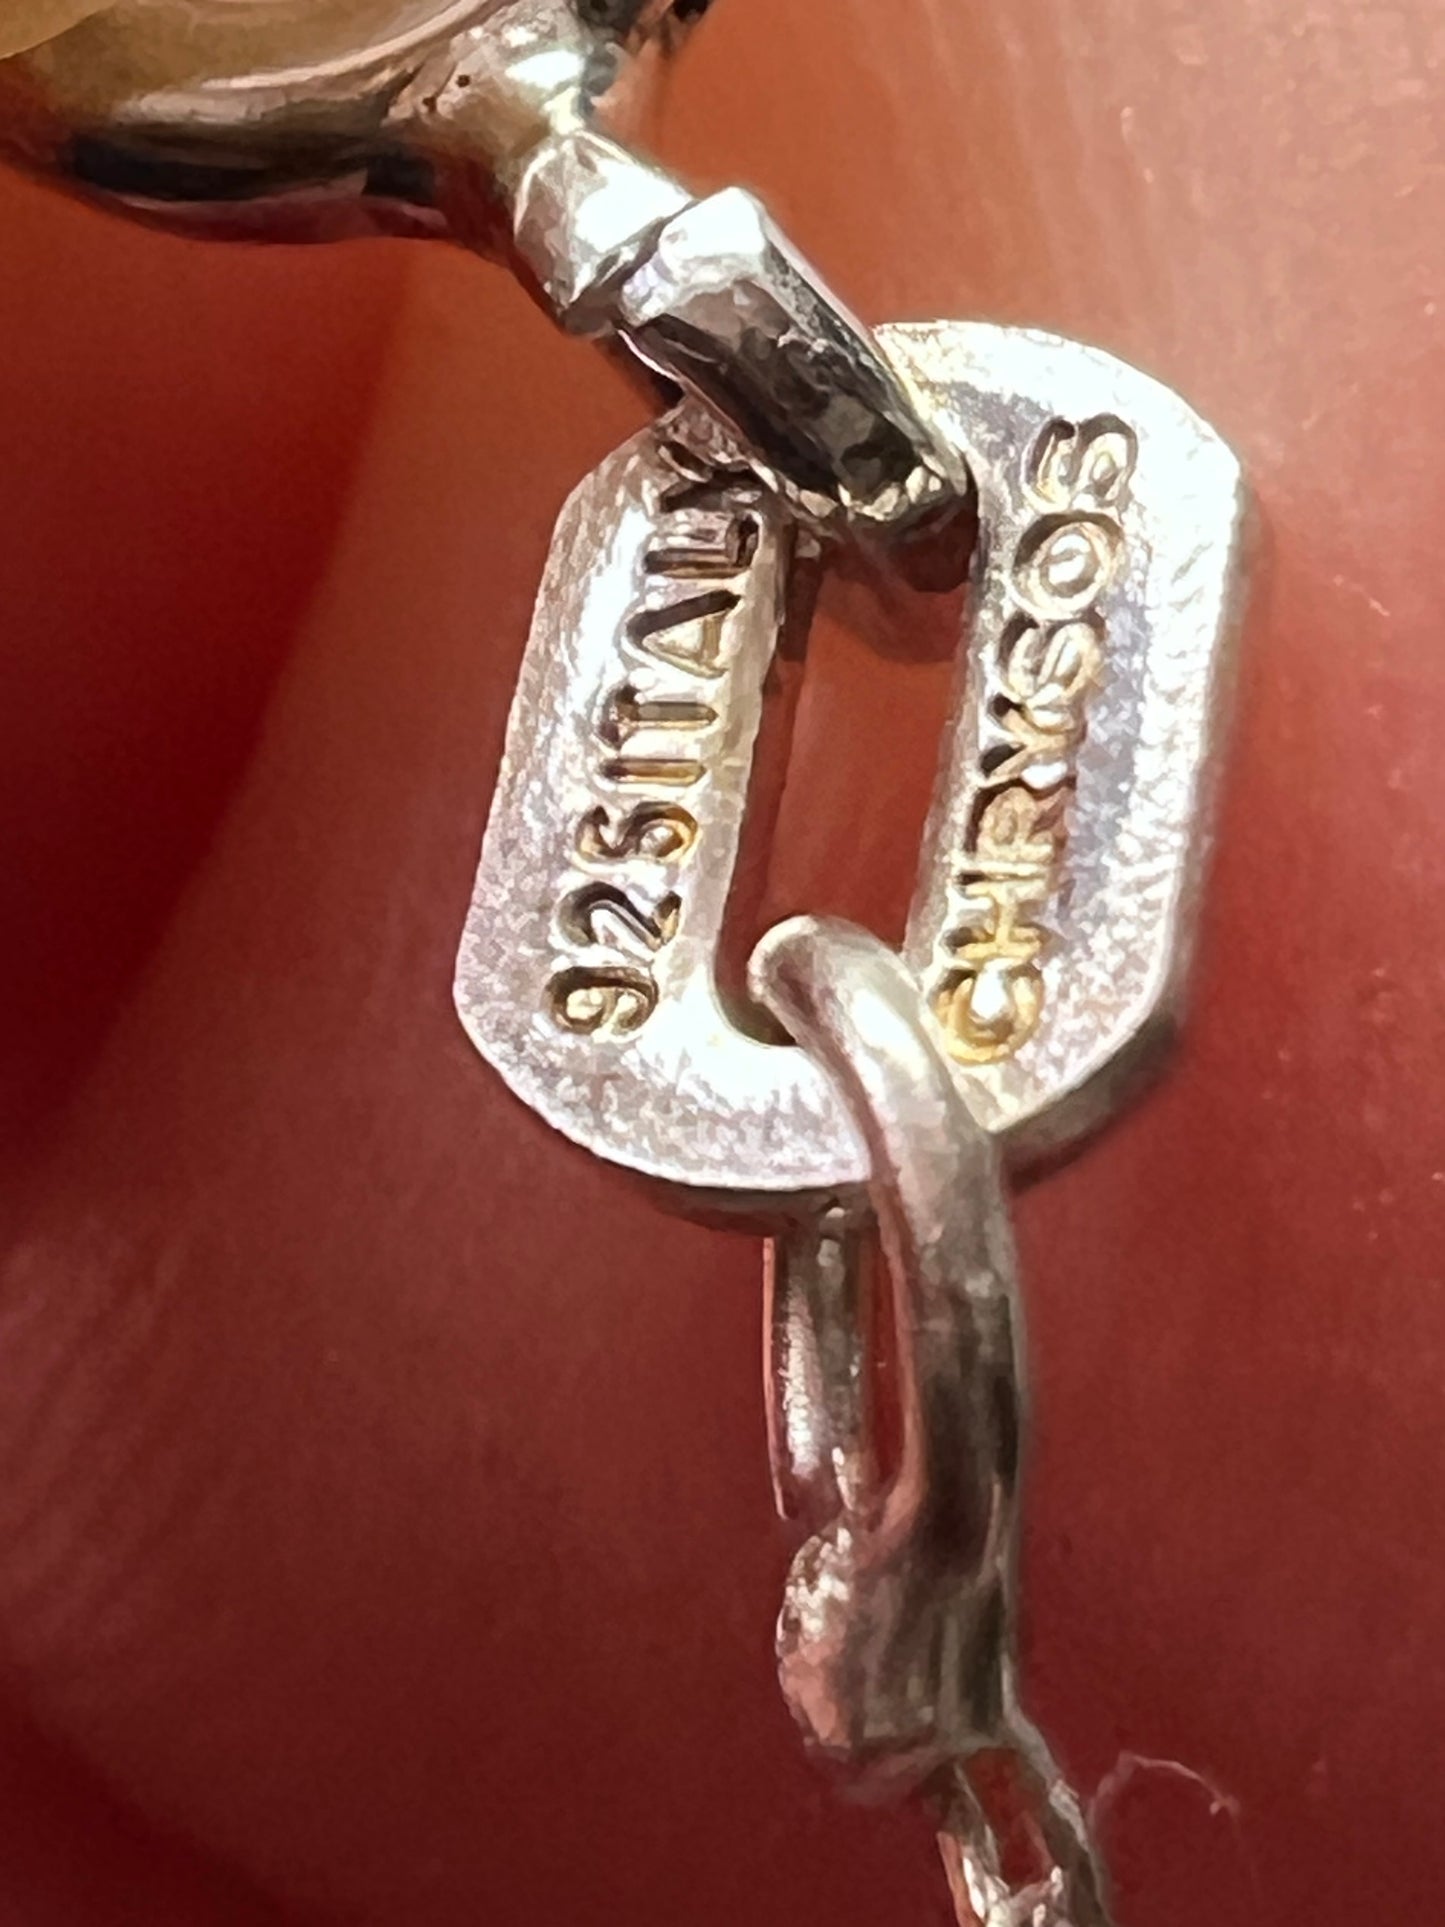 Lemon Quartz Sterling silver pendant and 20 inch chain necklace